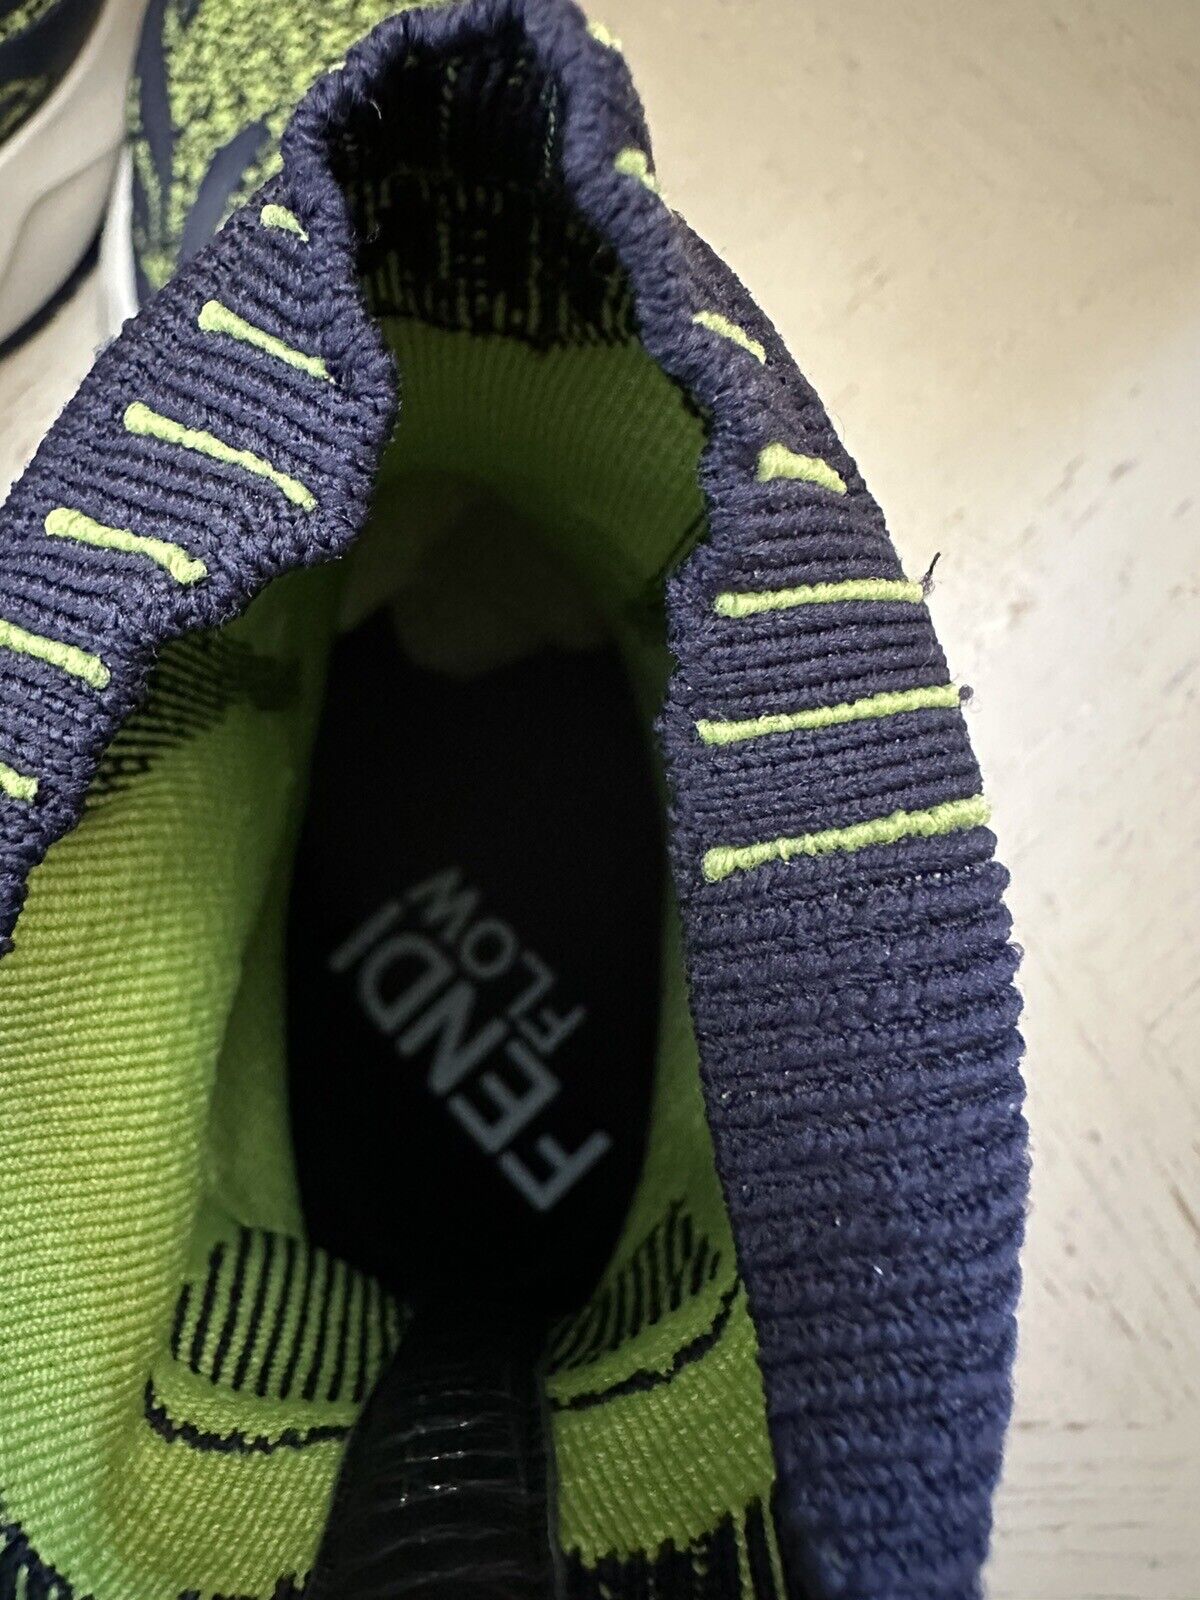 NIB 1190 долларов США Fendi Contrast Knit High Top кроссовки Темно-синий/зеленый 12 US/11 UK